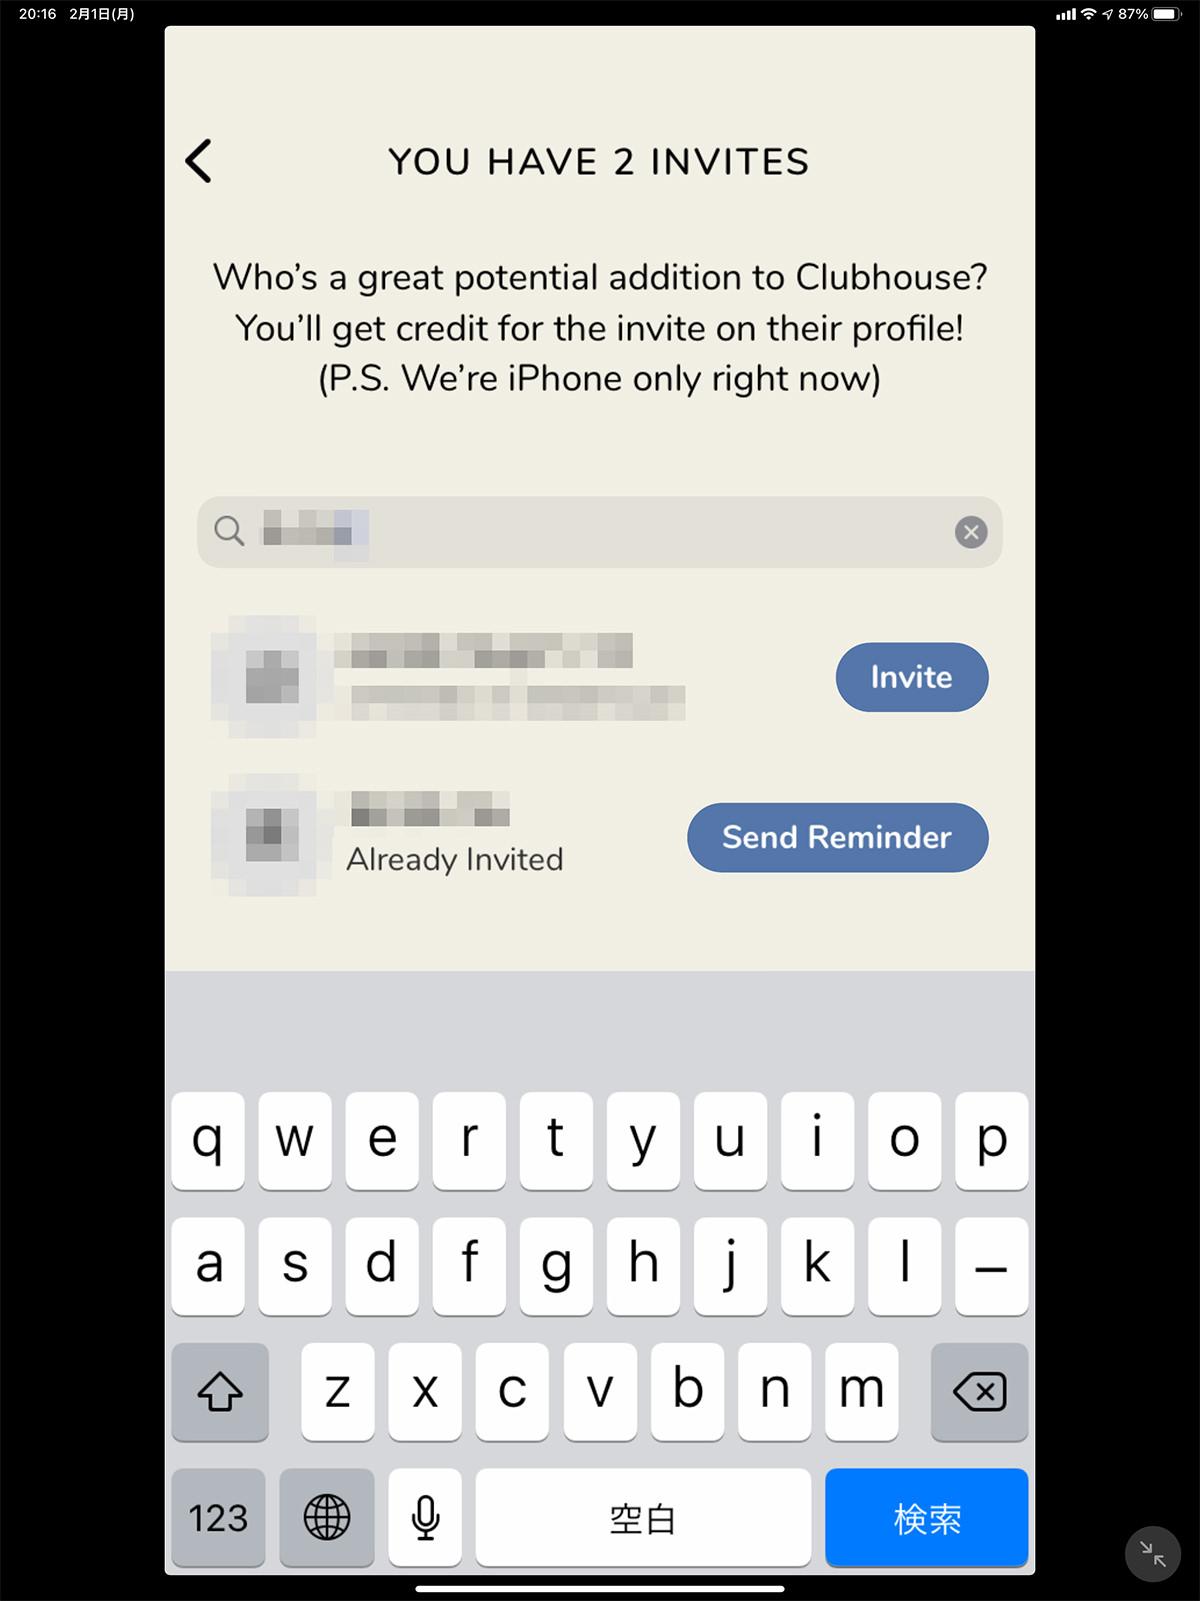 【Clubhouse】iPad からでも、他の人は招待できる #clubhouse